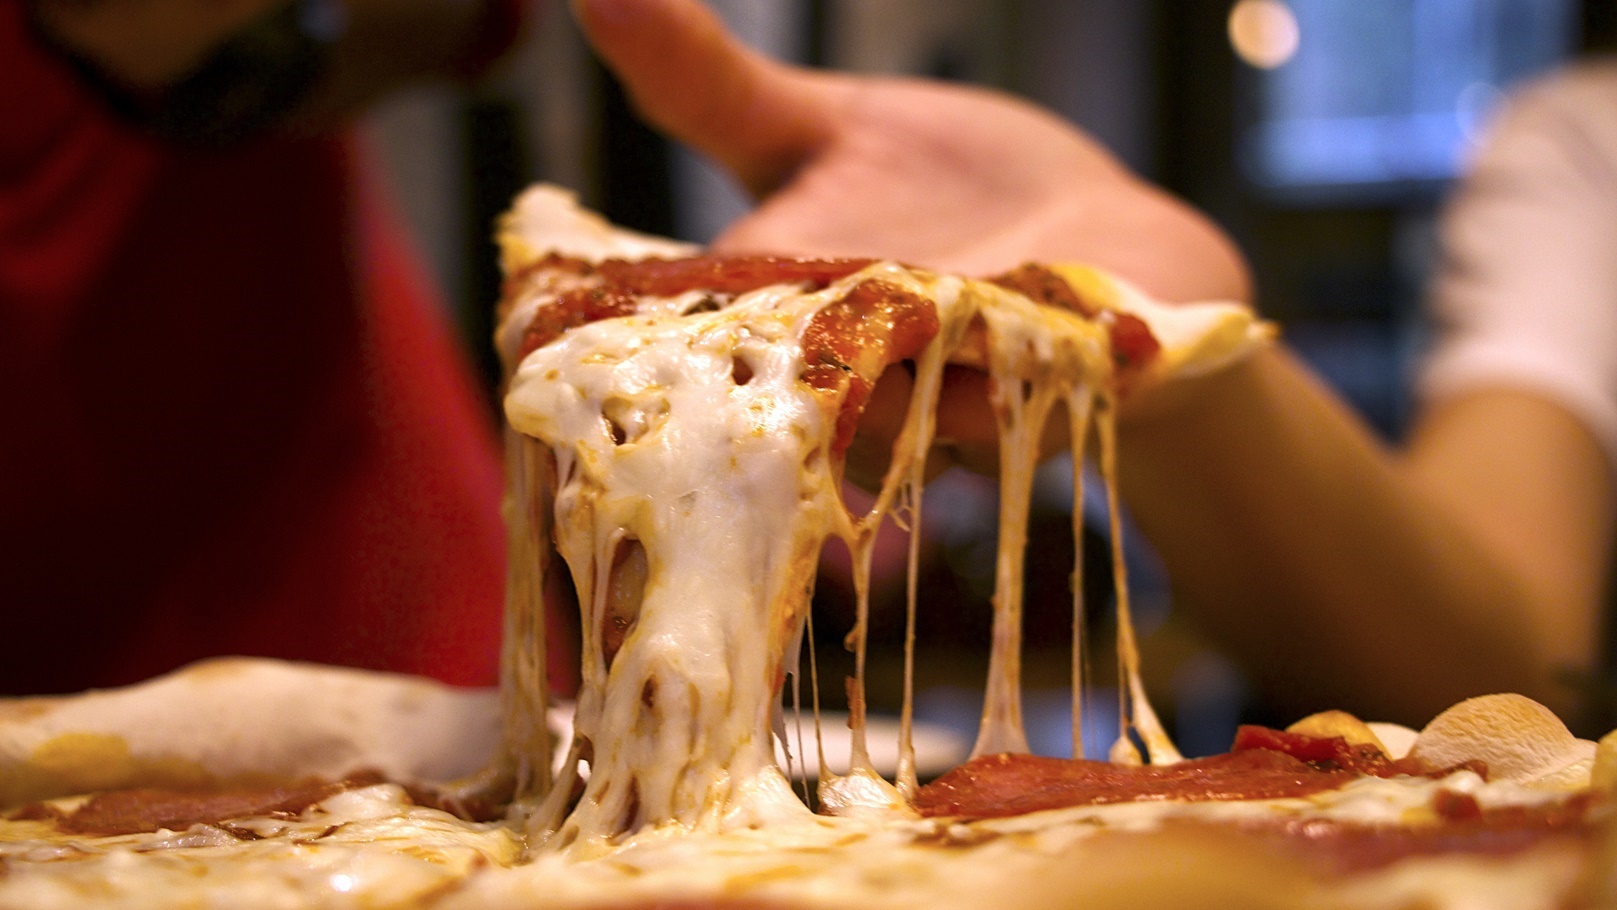 eating-pizza-with-hand-2021-09-04-18-22-16-utc